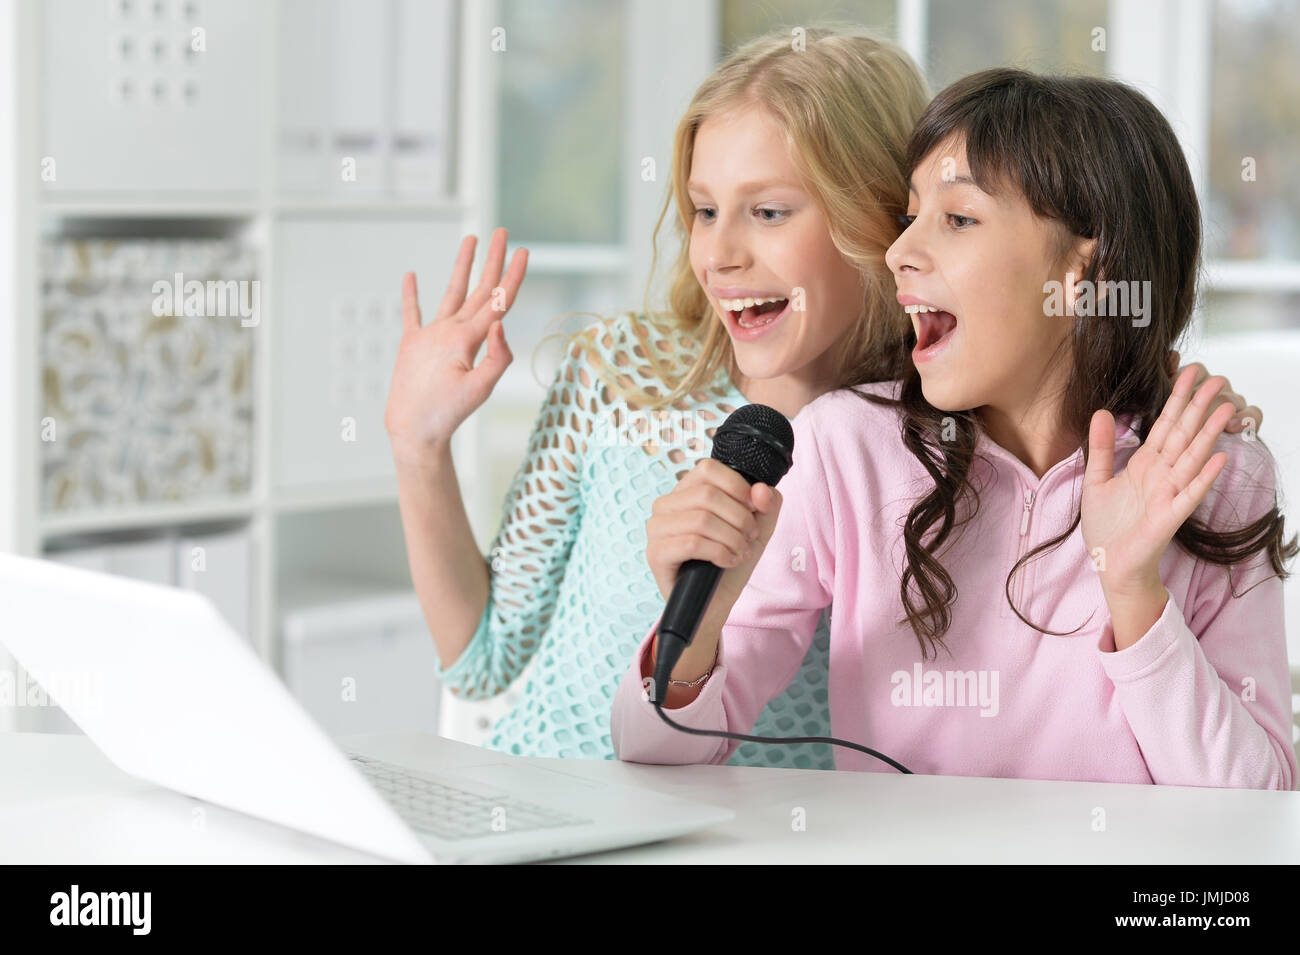 Two teen girls sitting at table and singing karaoke Stock Photo